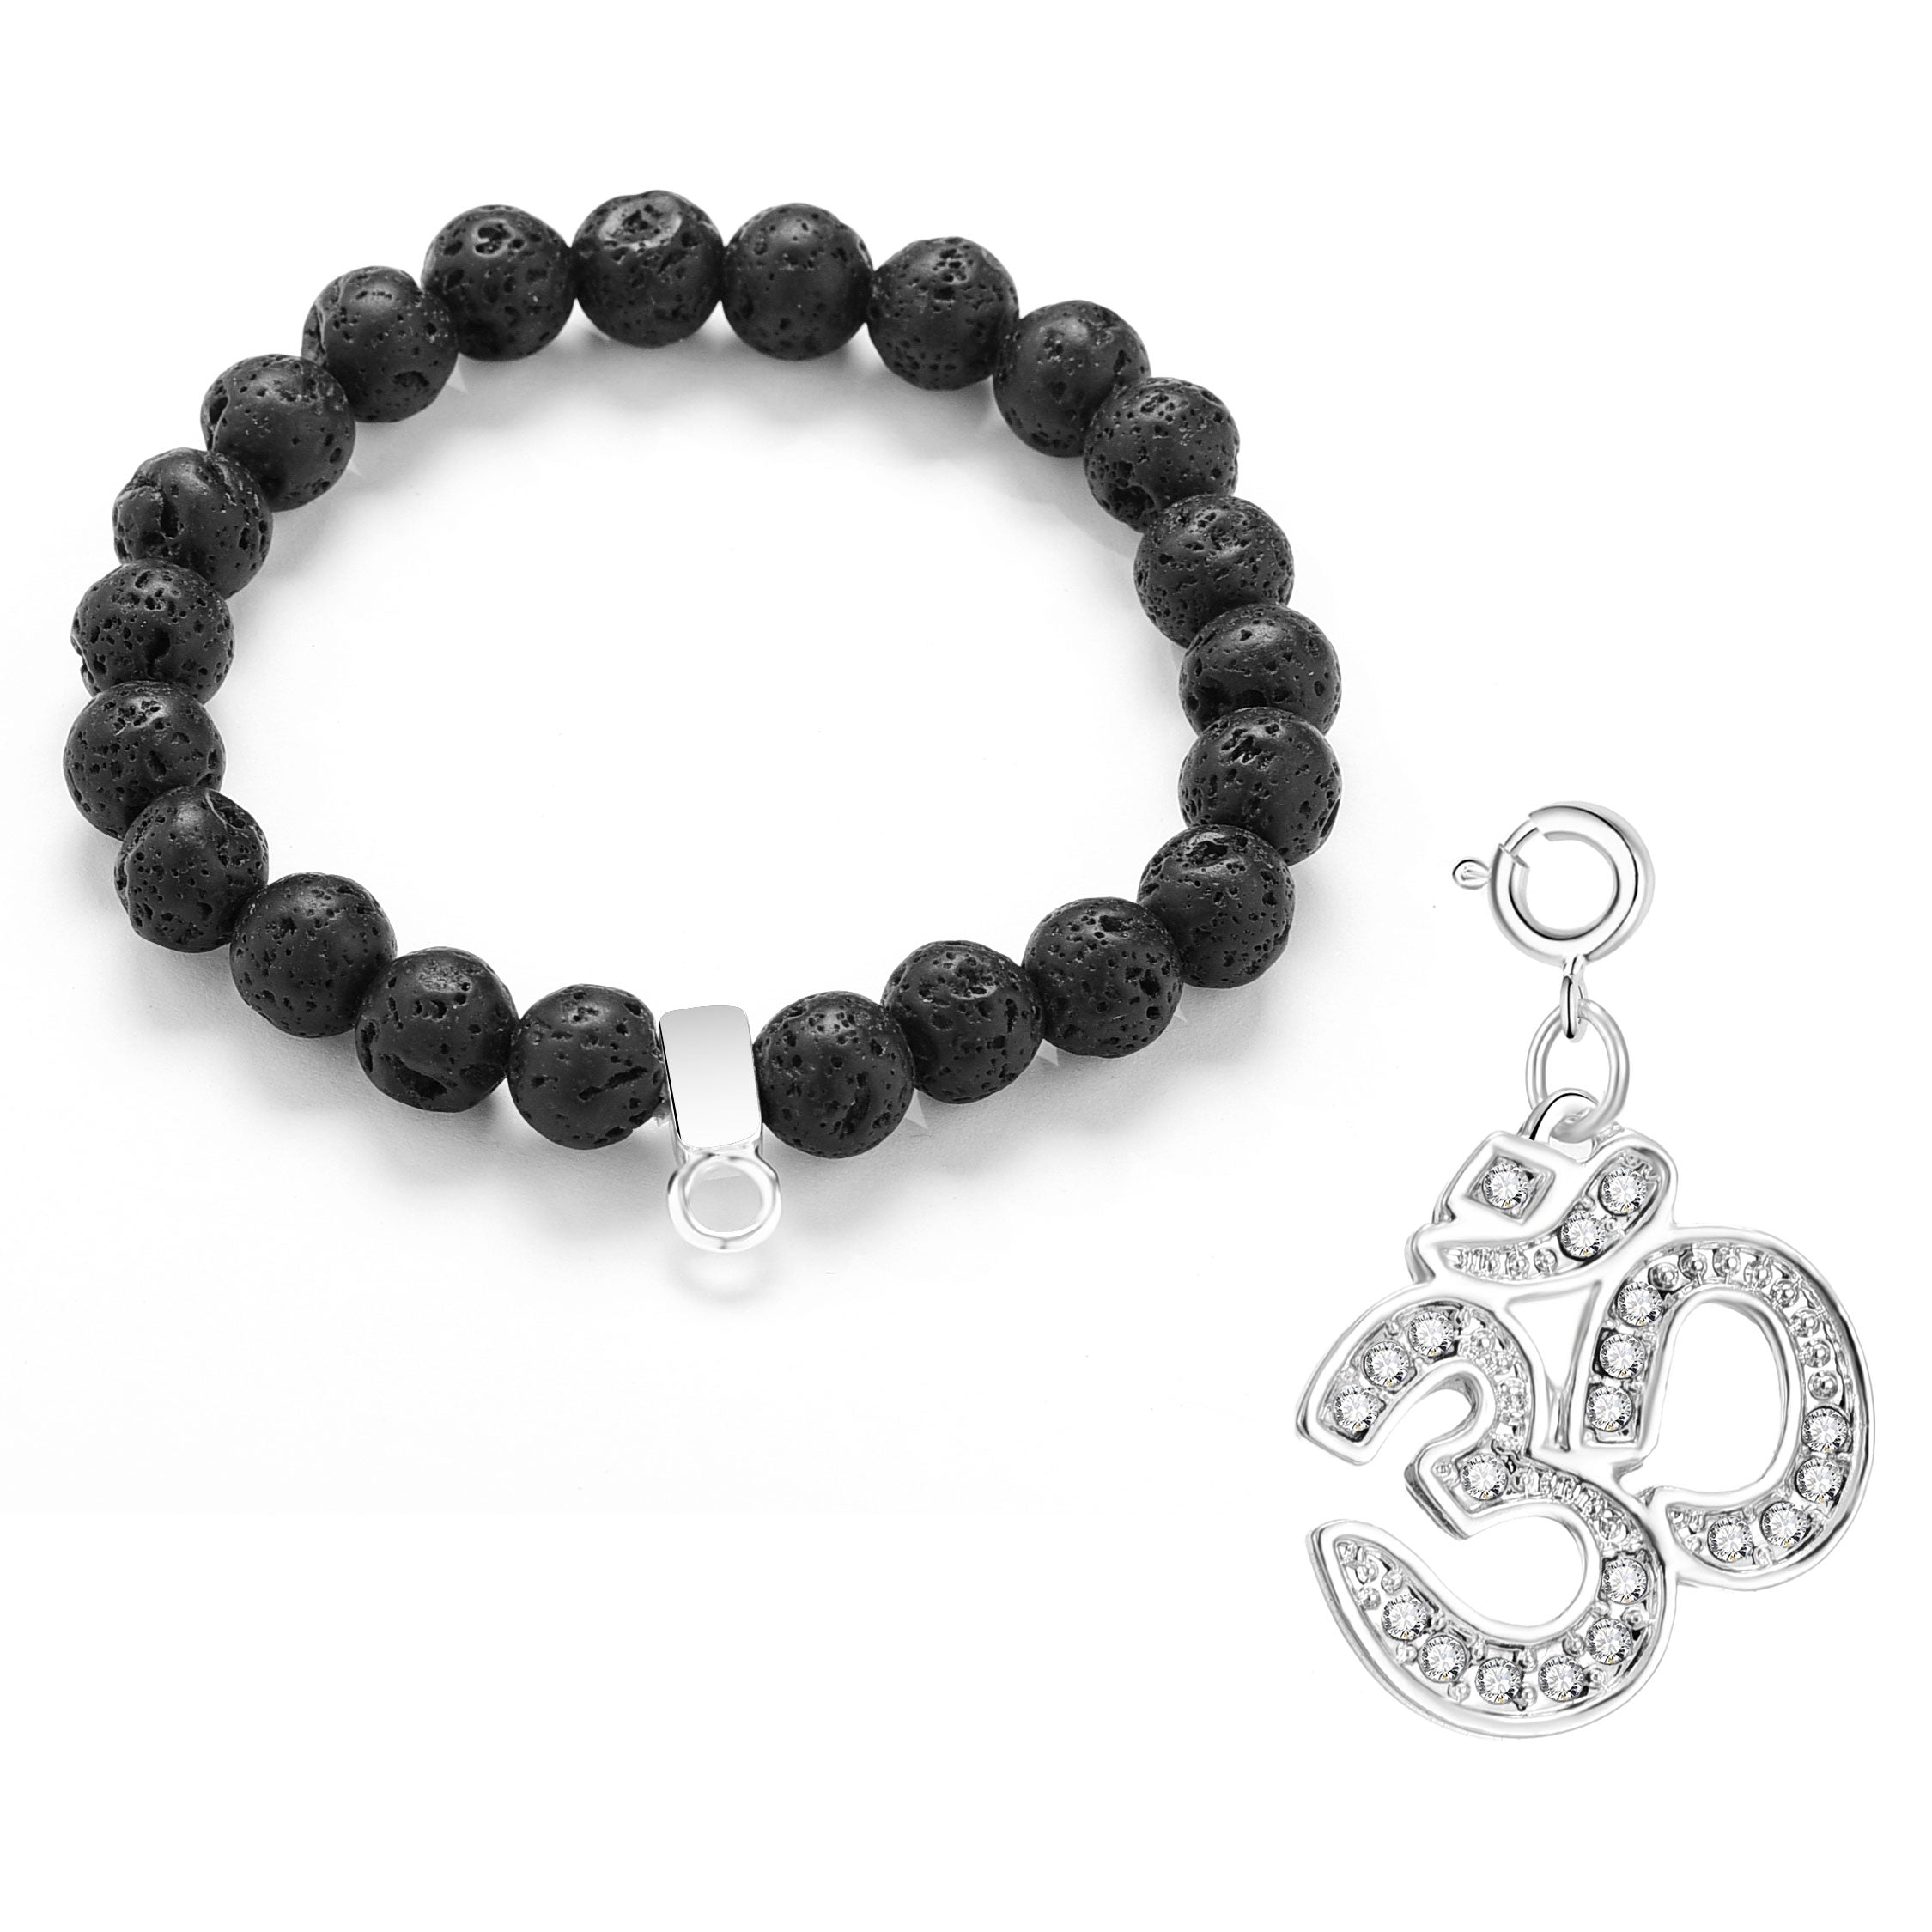 Lava Rock Gemstone Bracelet with Charm Created with Zircondia® Crystals